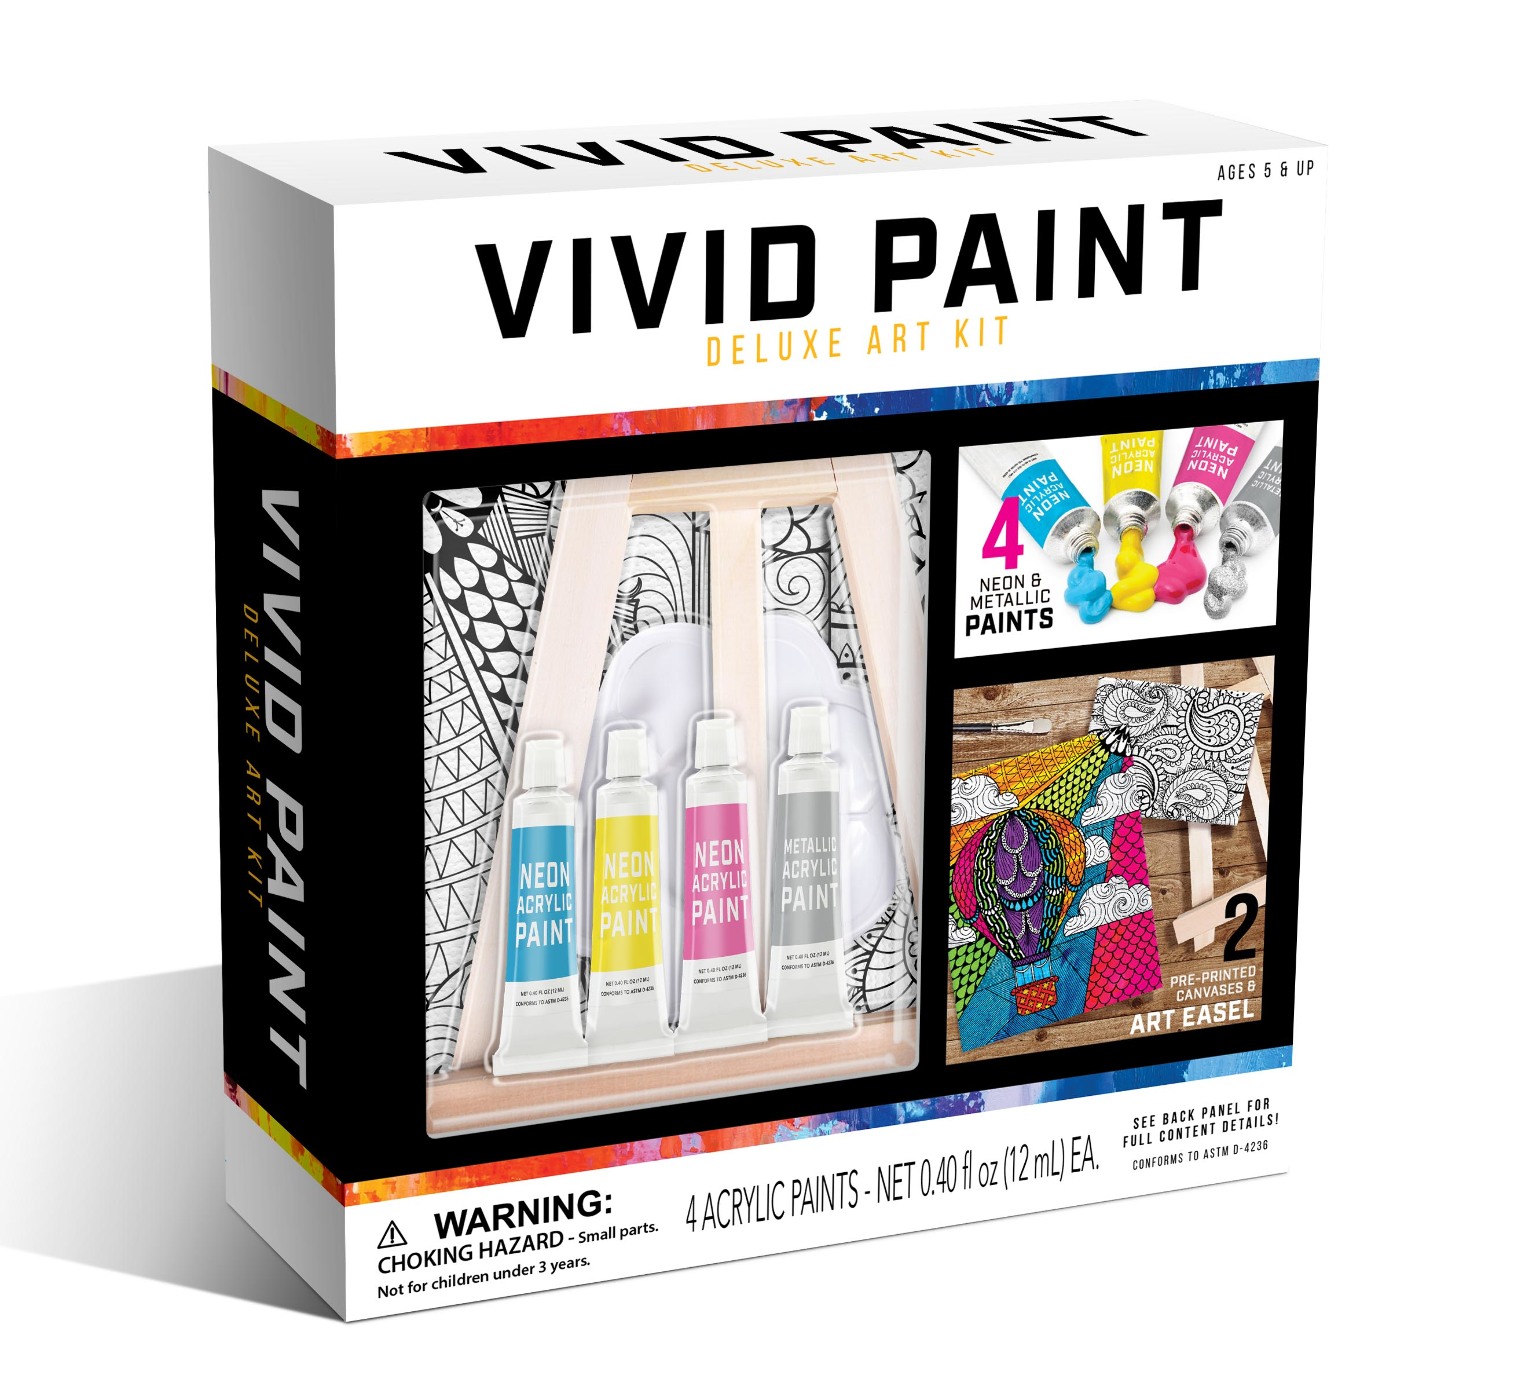 Wholesale Paint Pou Deluxe Art Kits, 1 Canvas - DollarDays